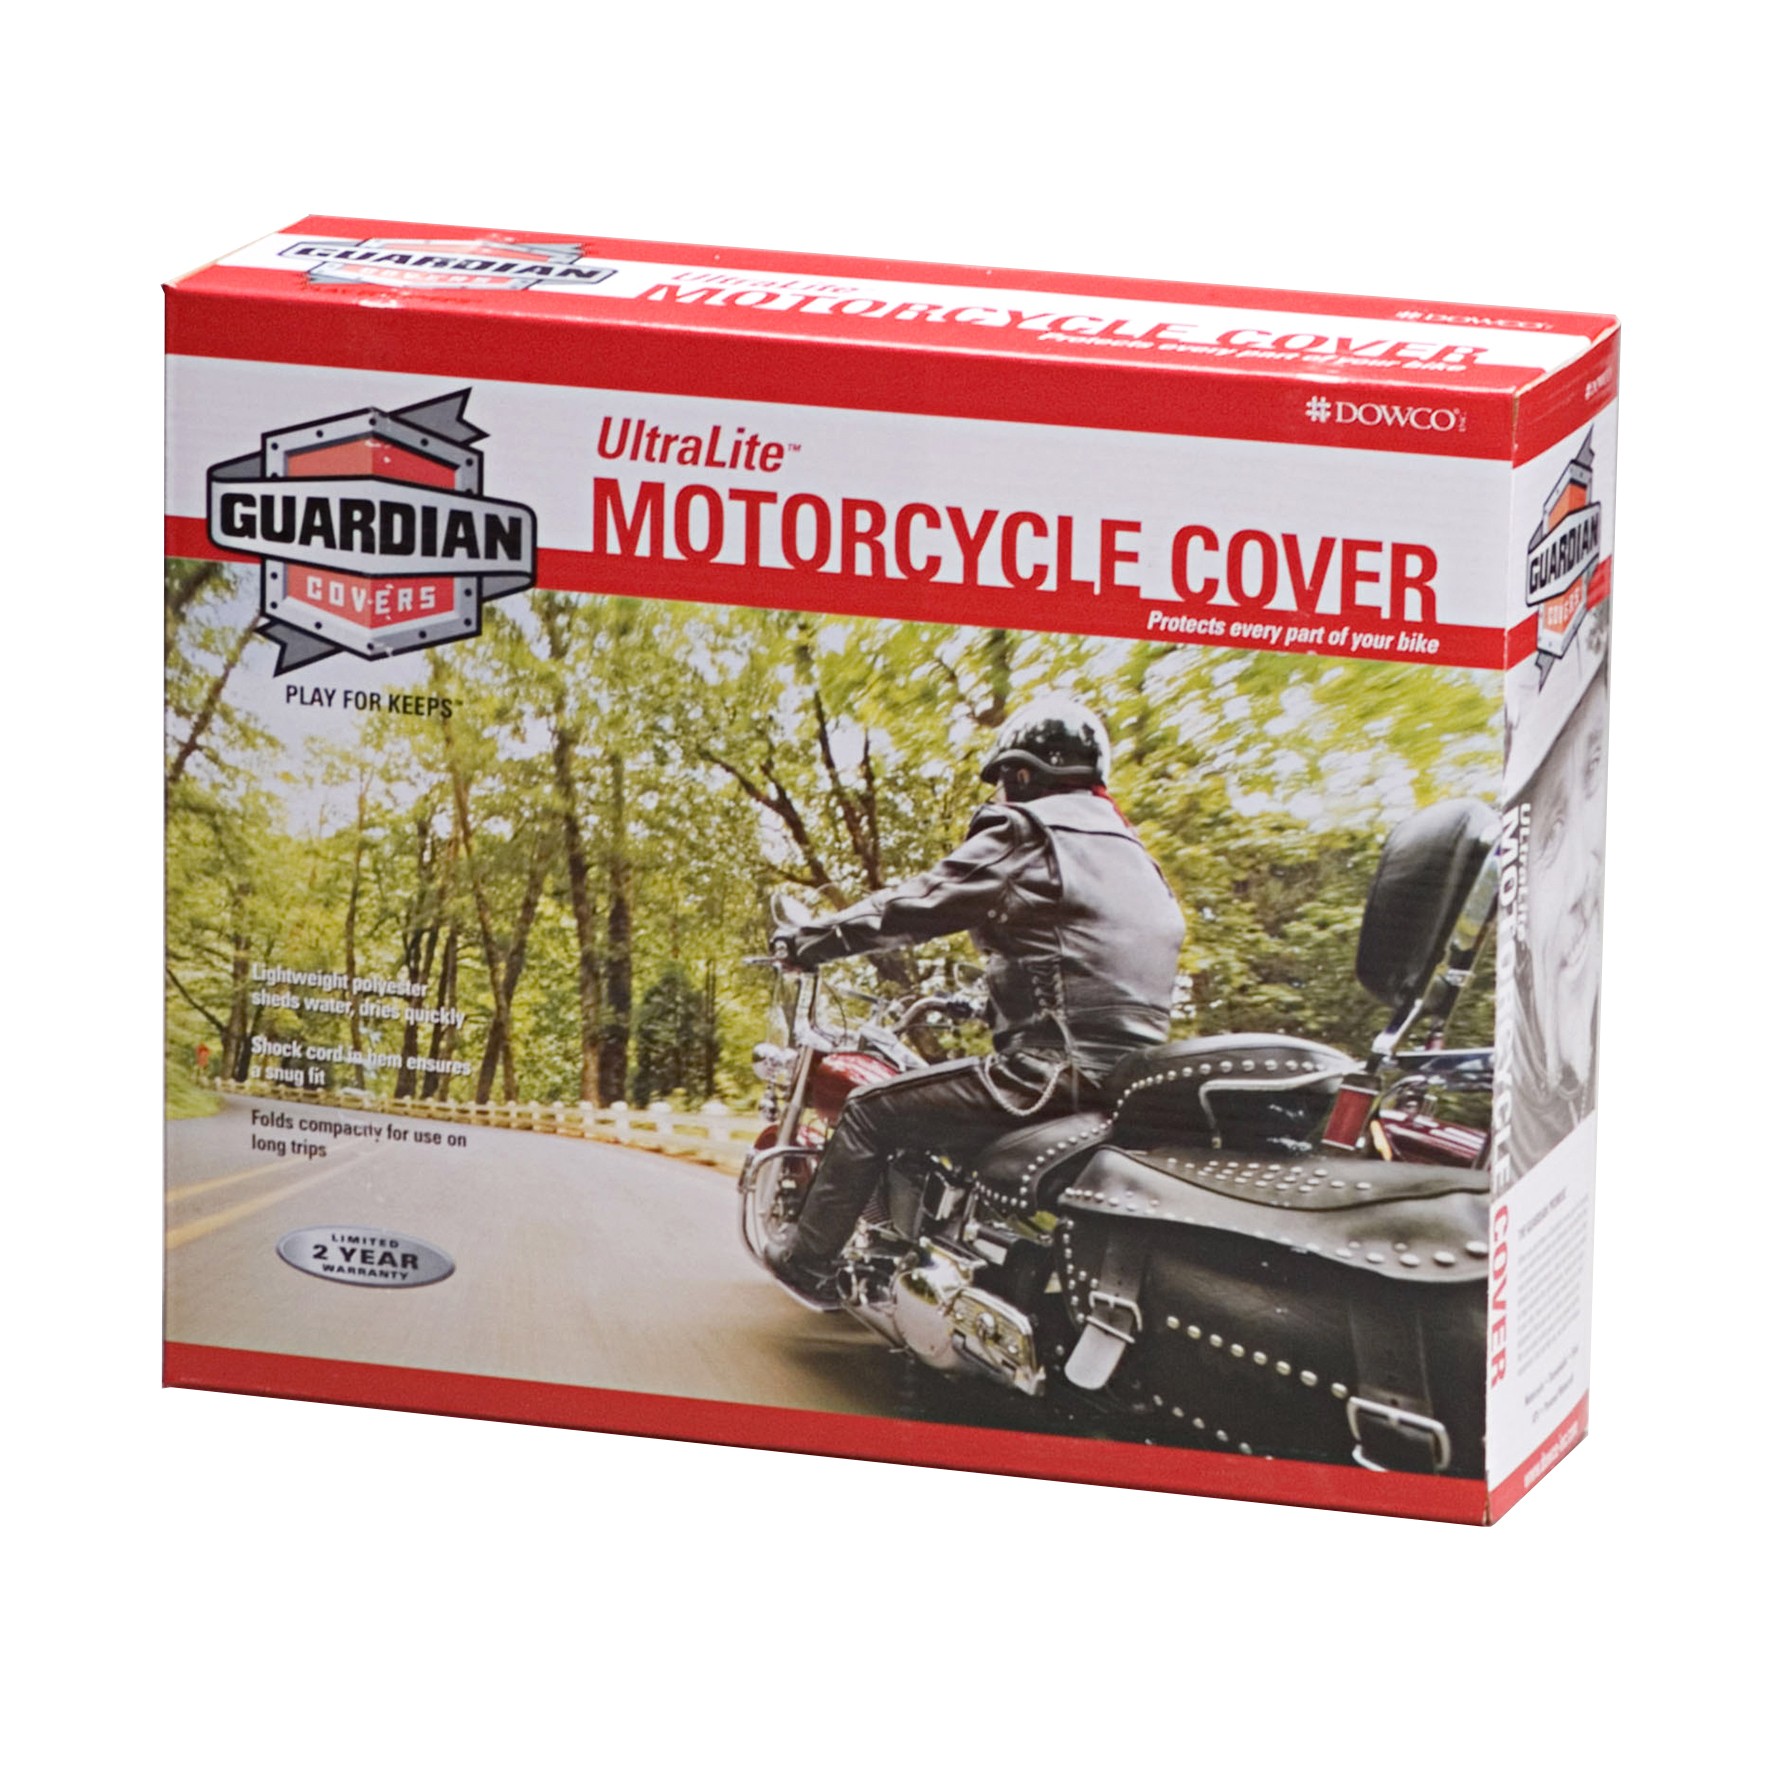 Details about   Ultralite Motorcycle Cover~2000 Suzuki VS800GL Intruder Dowco 26010-01